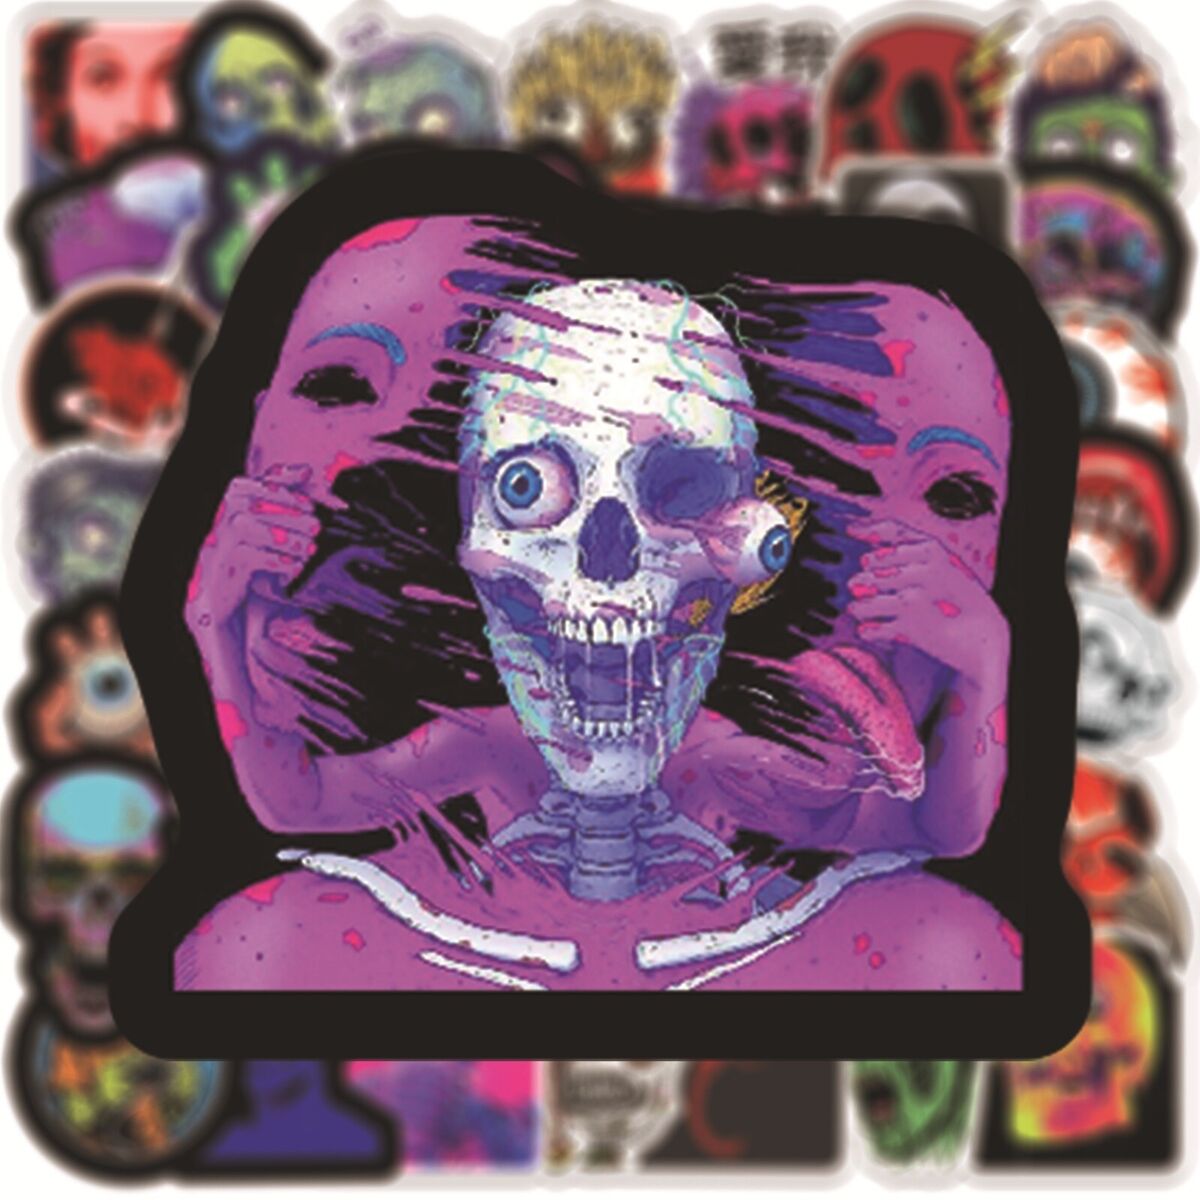 2 Stickers Skull Grunge Car Car Sticker Tuning JDM Decal Horror